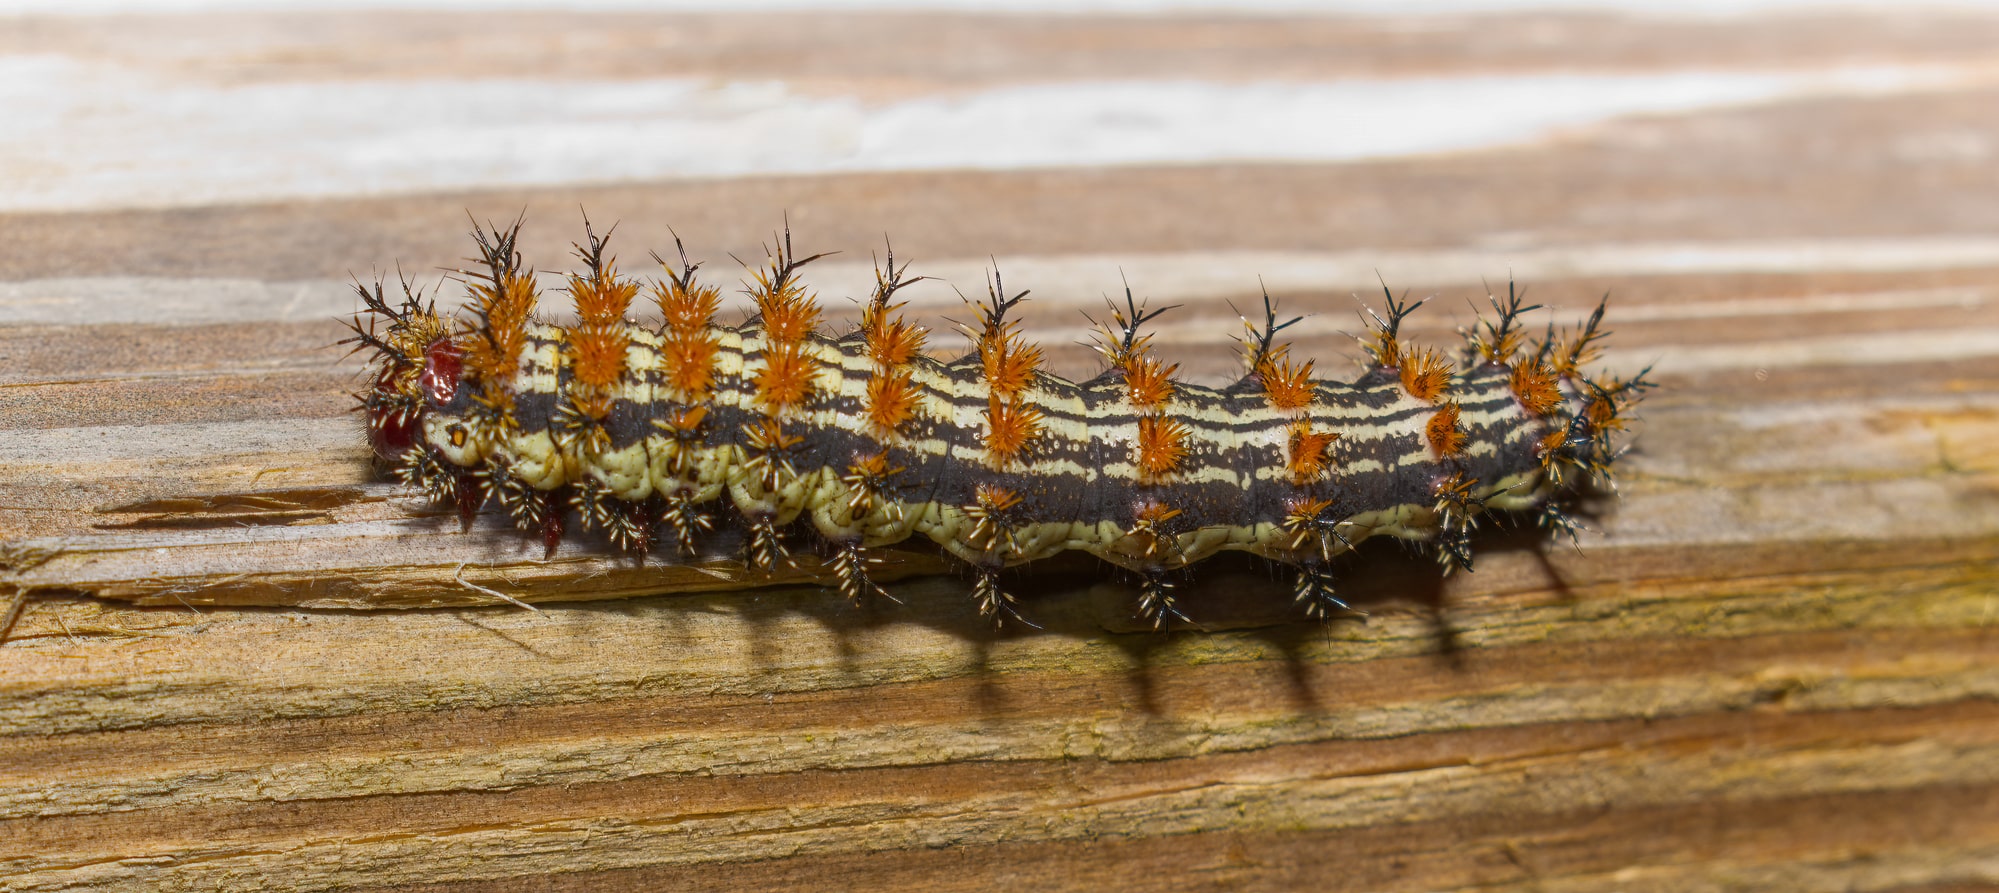 spiny caterpillar on wood